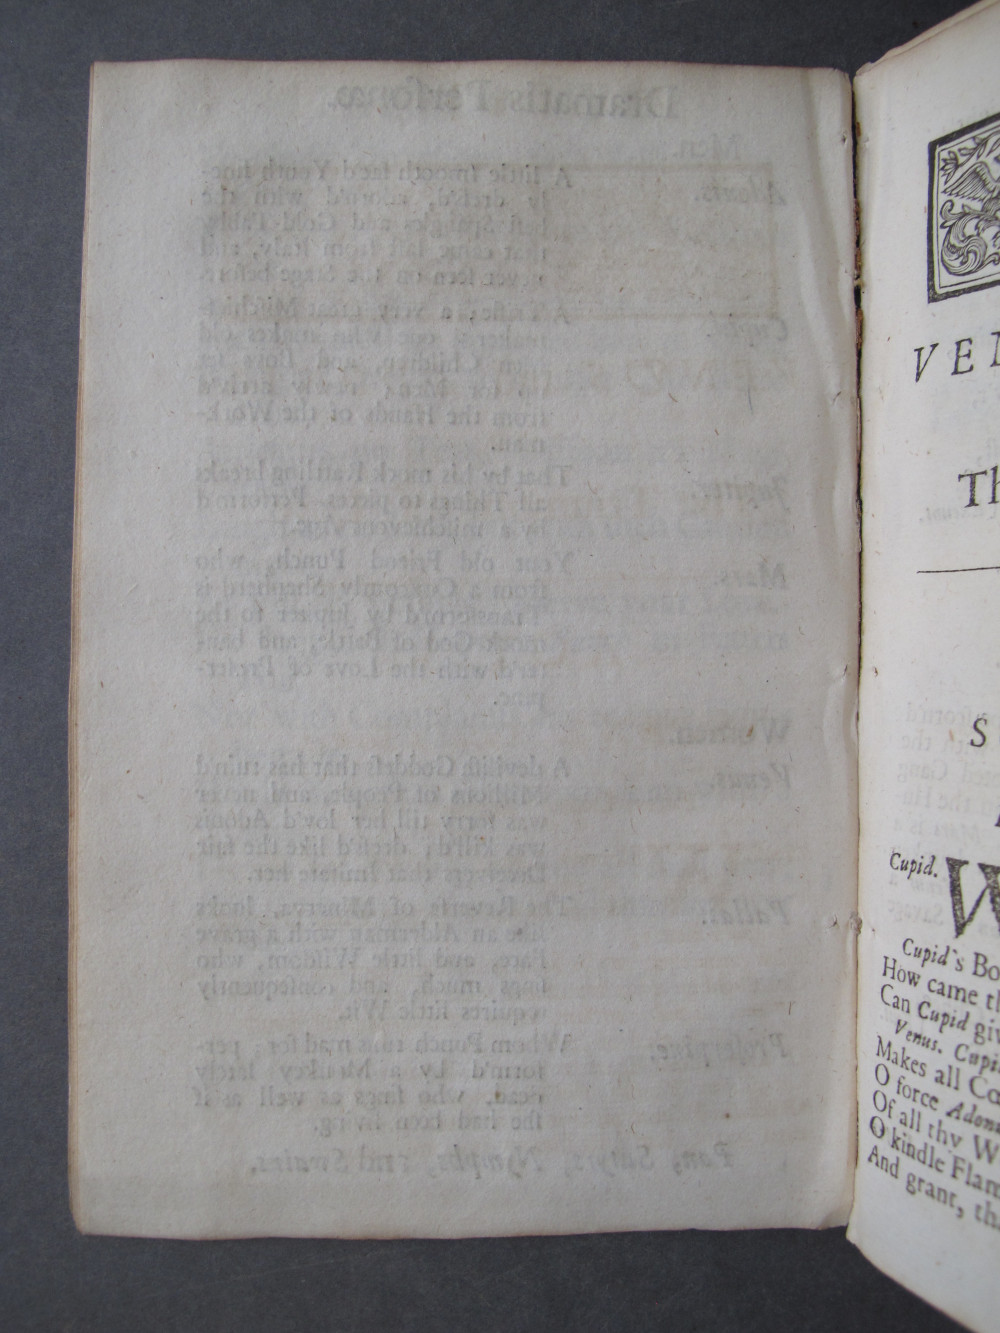 Folio B4 verso (no text)